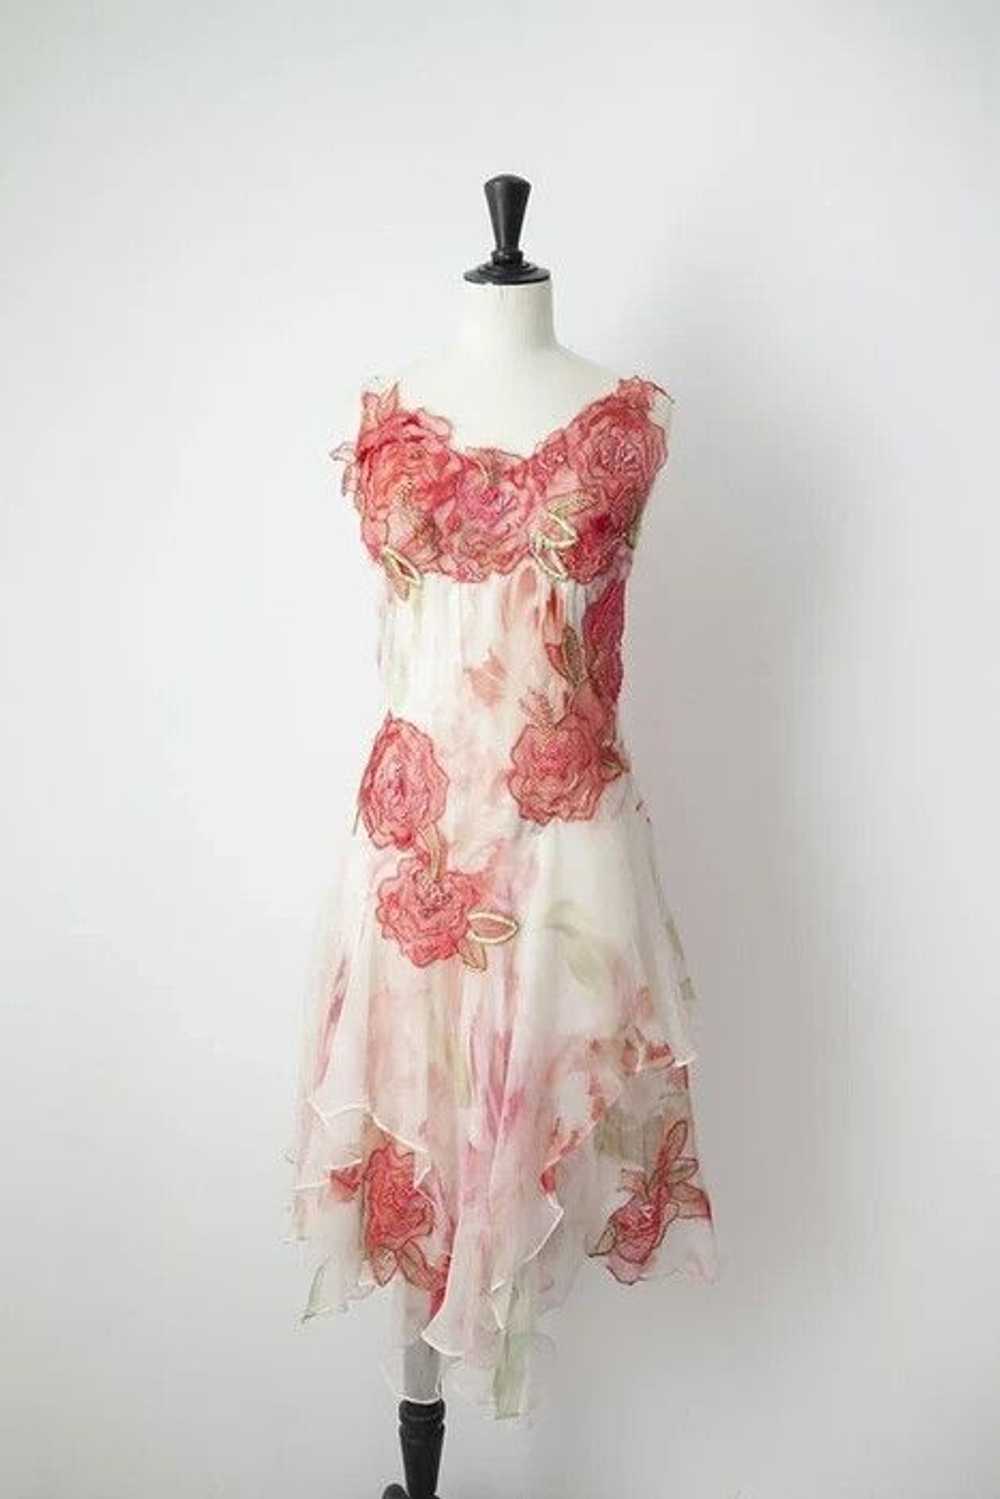 Barney Cools Couture à porter flower dress - image 3